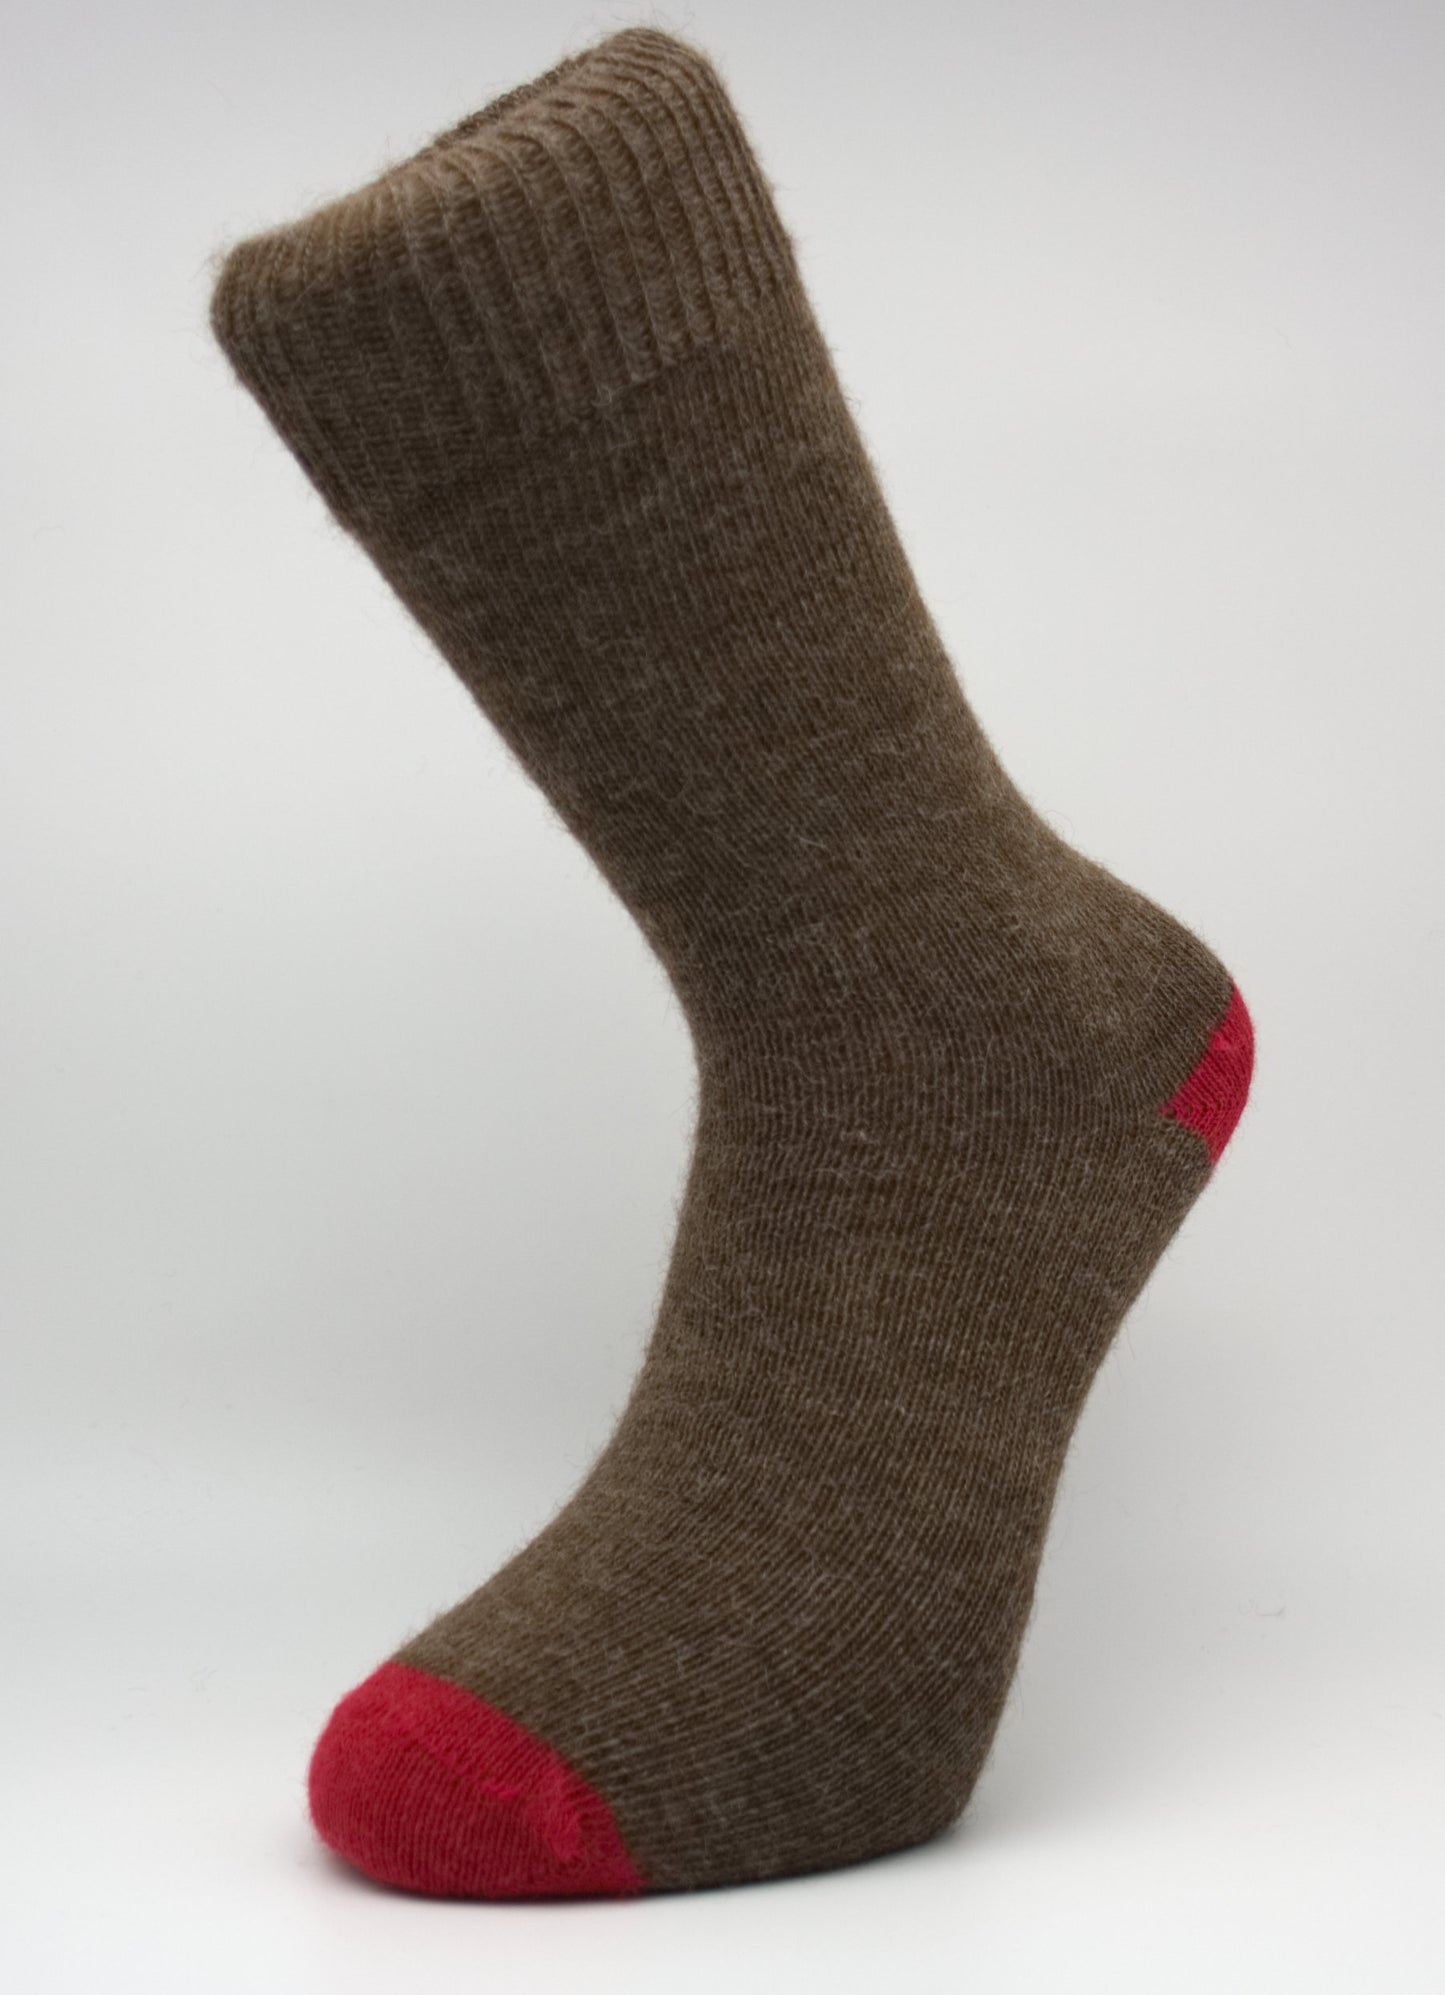 Contrast Everyday Alpaca Socks